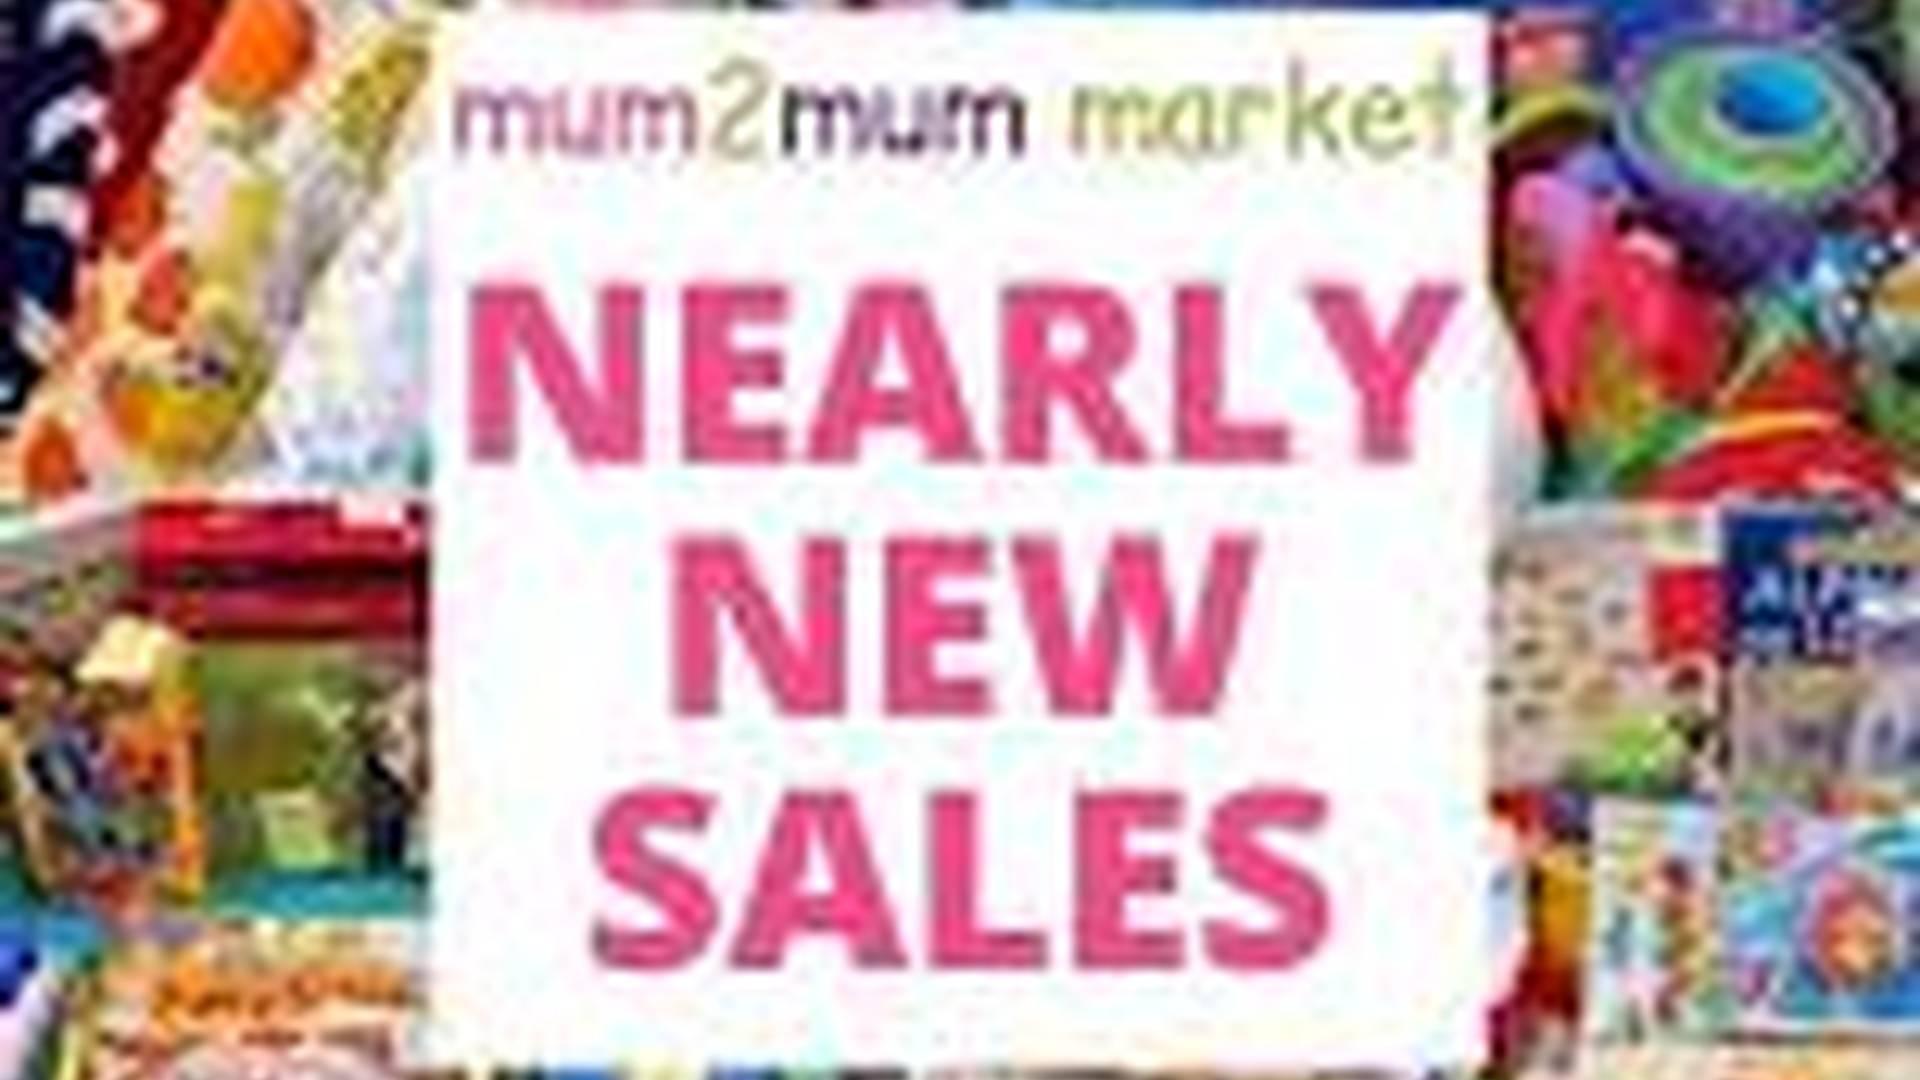 Mum2Mum Market - May to July photo